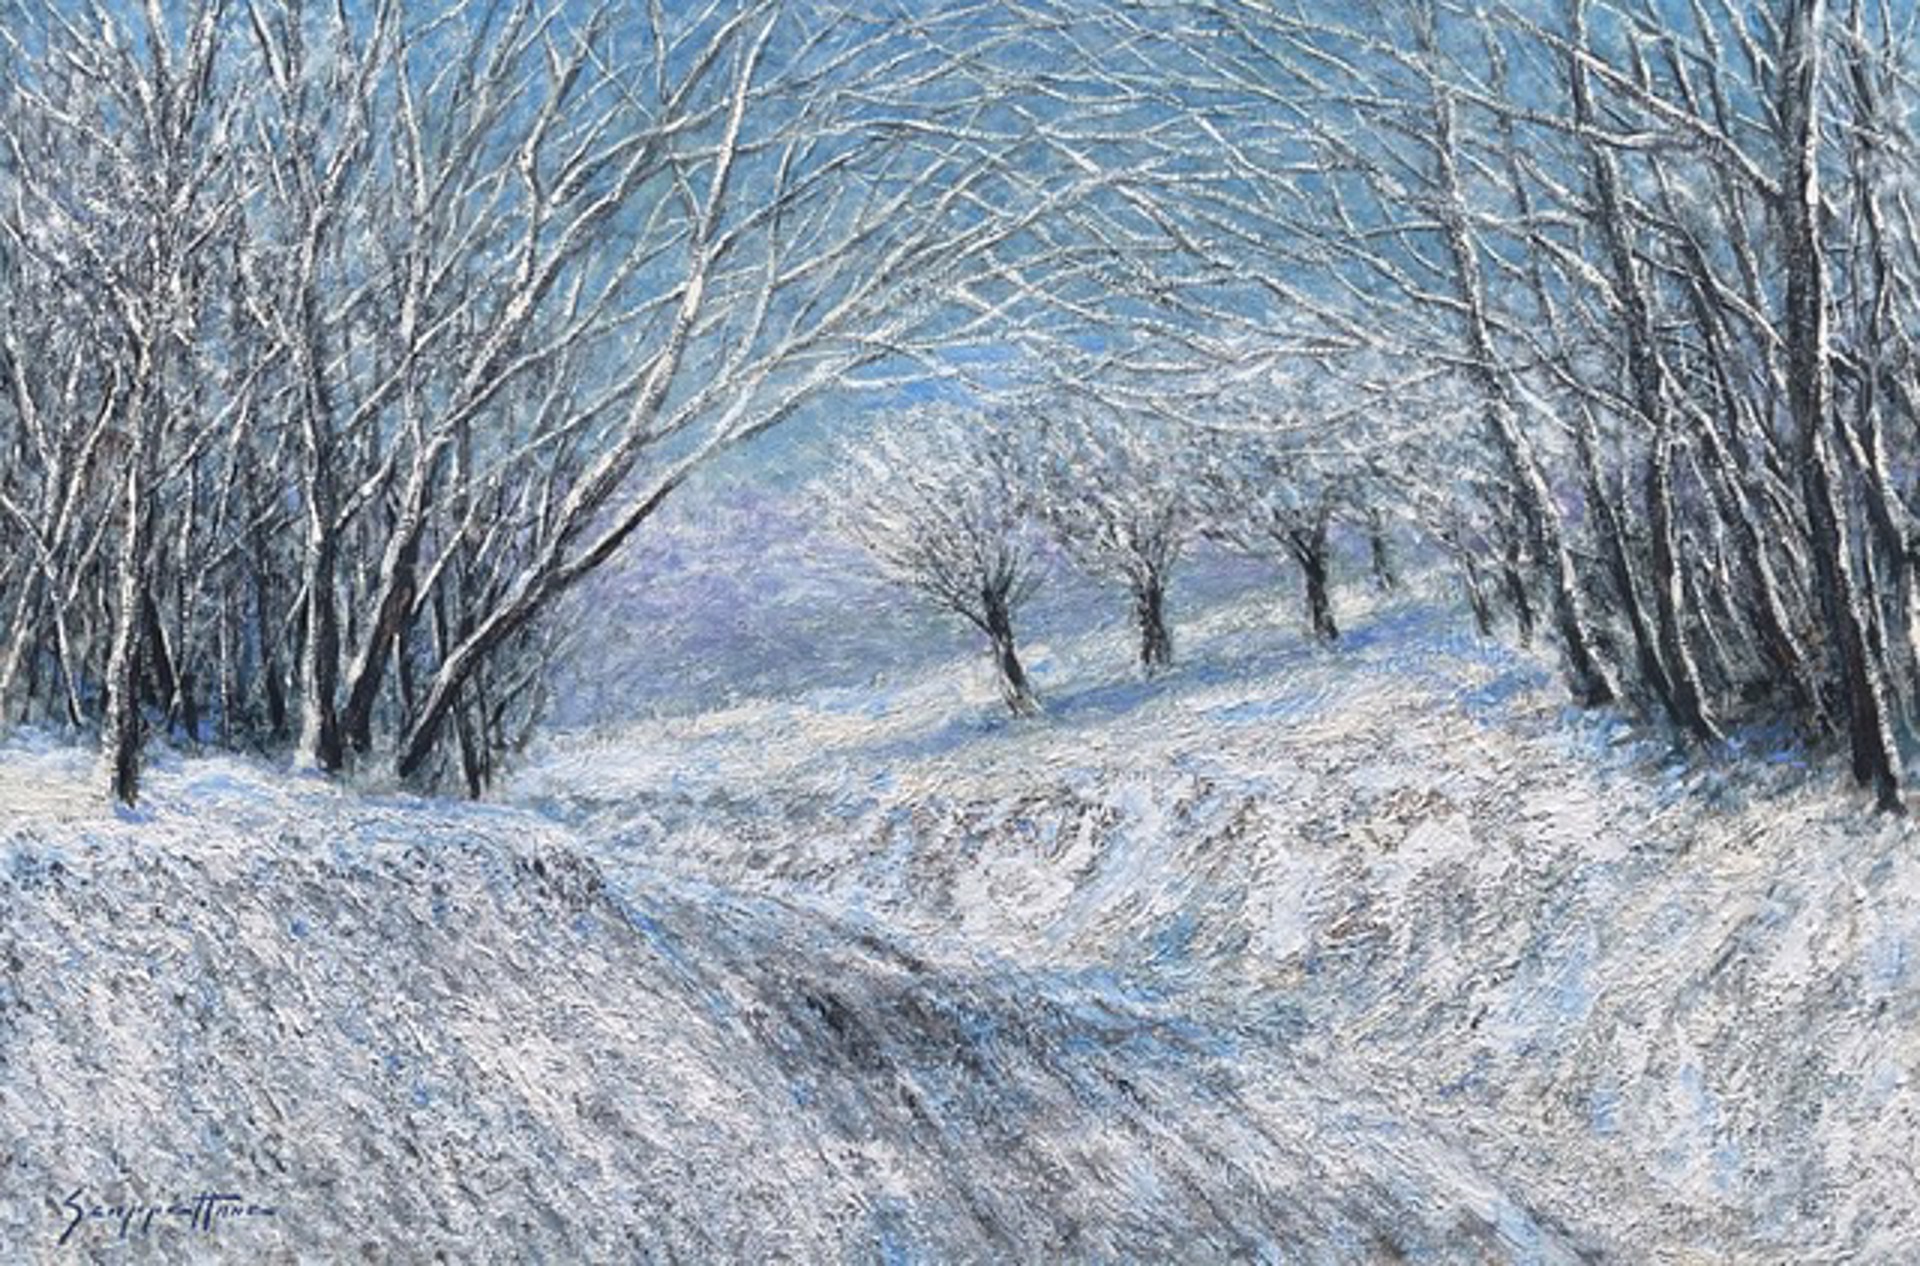 Winter Woods by James Scoppettone